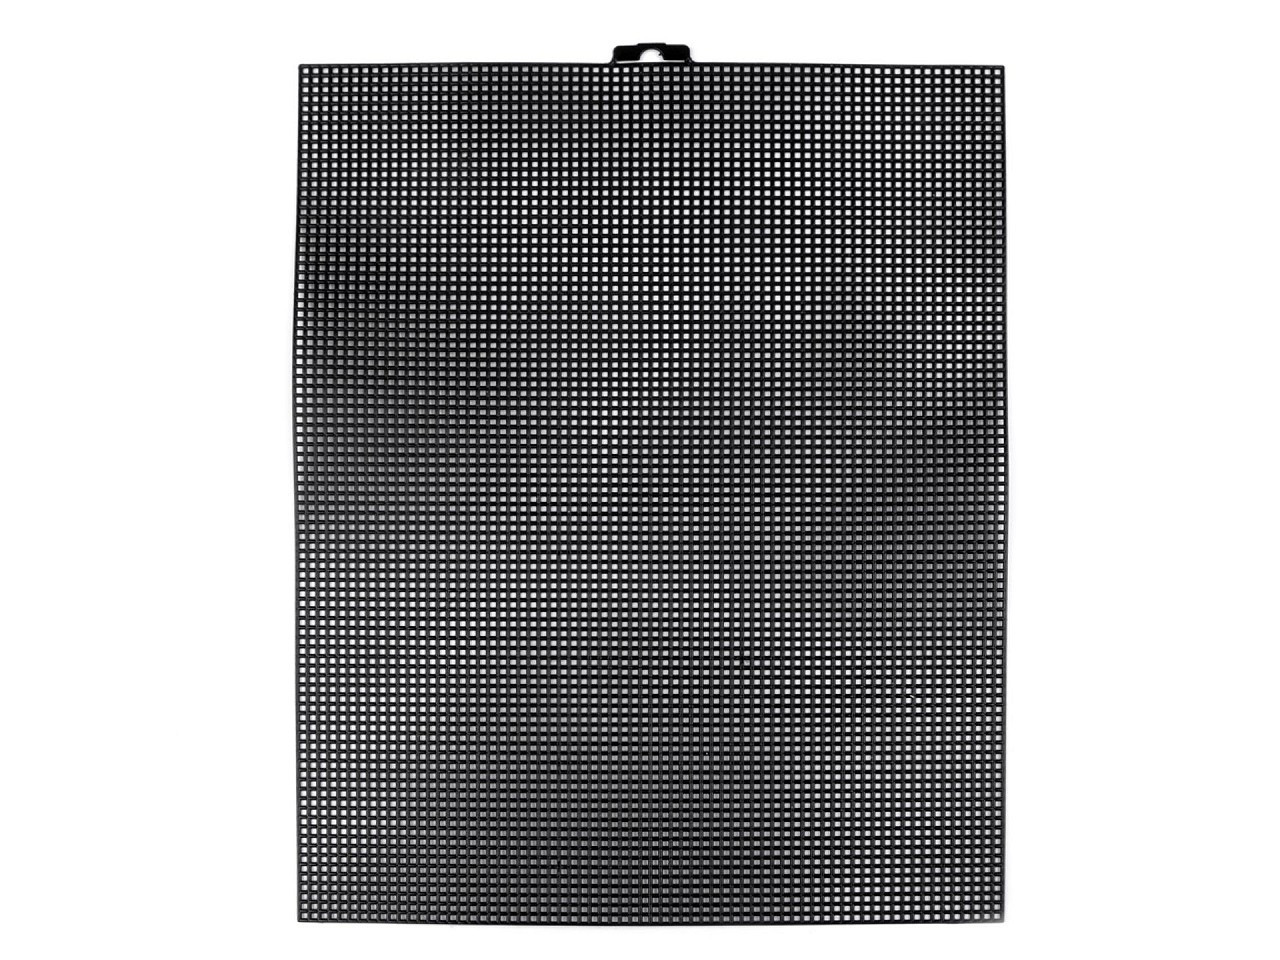 Plastová kanava / mřížka tapiko 26x33,5 cm, barva 2 černá